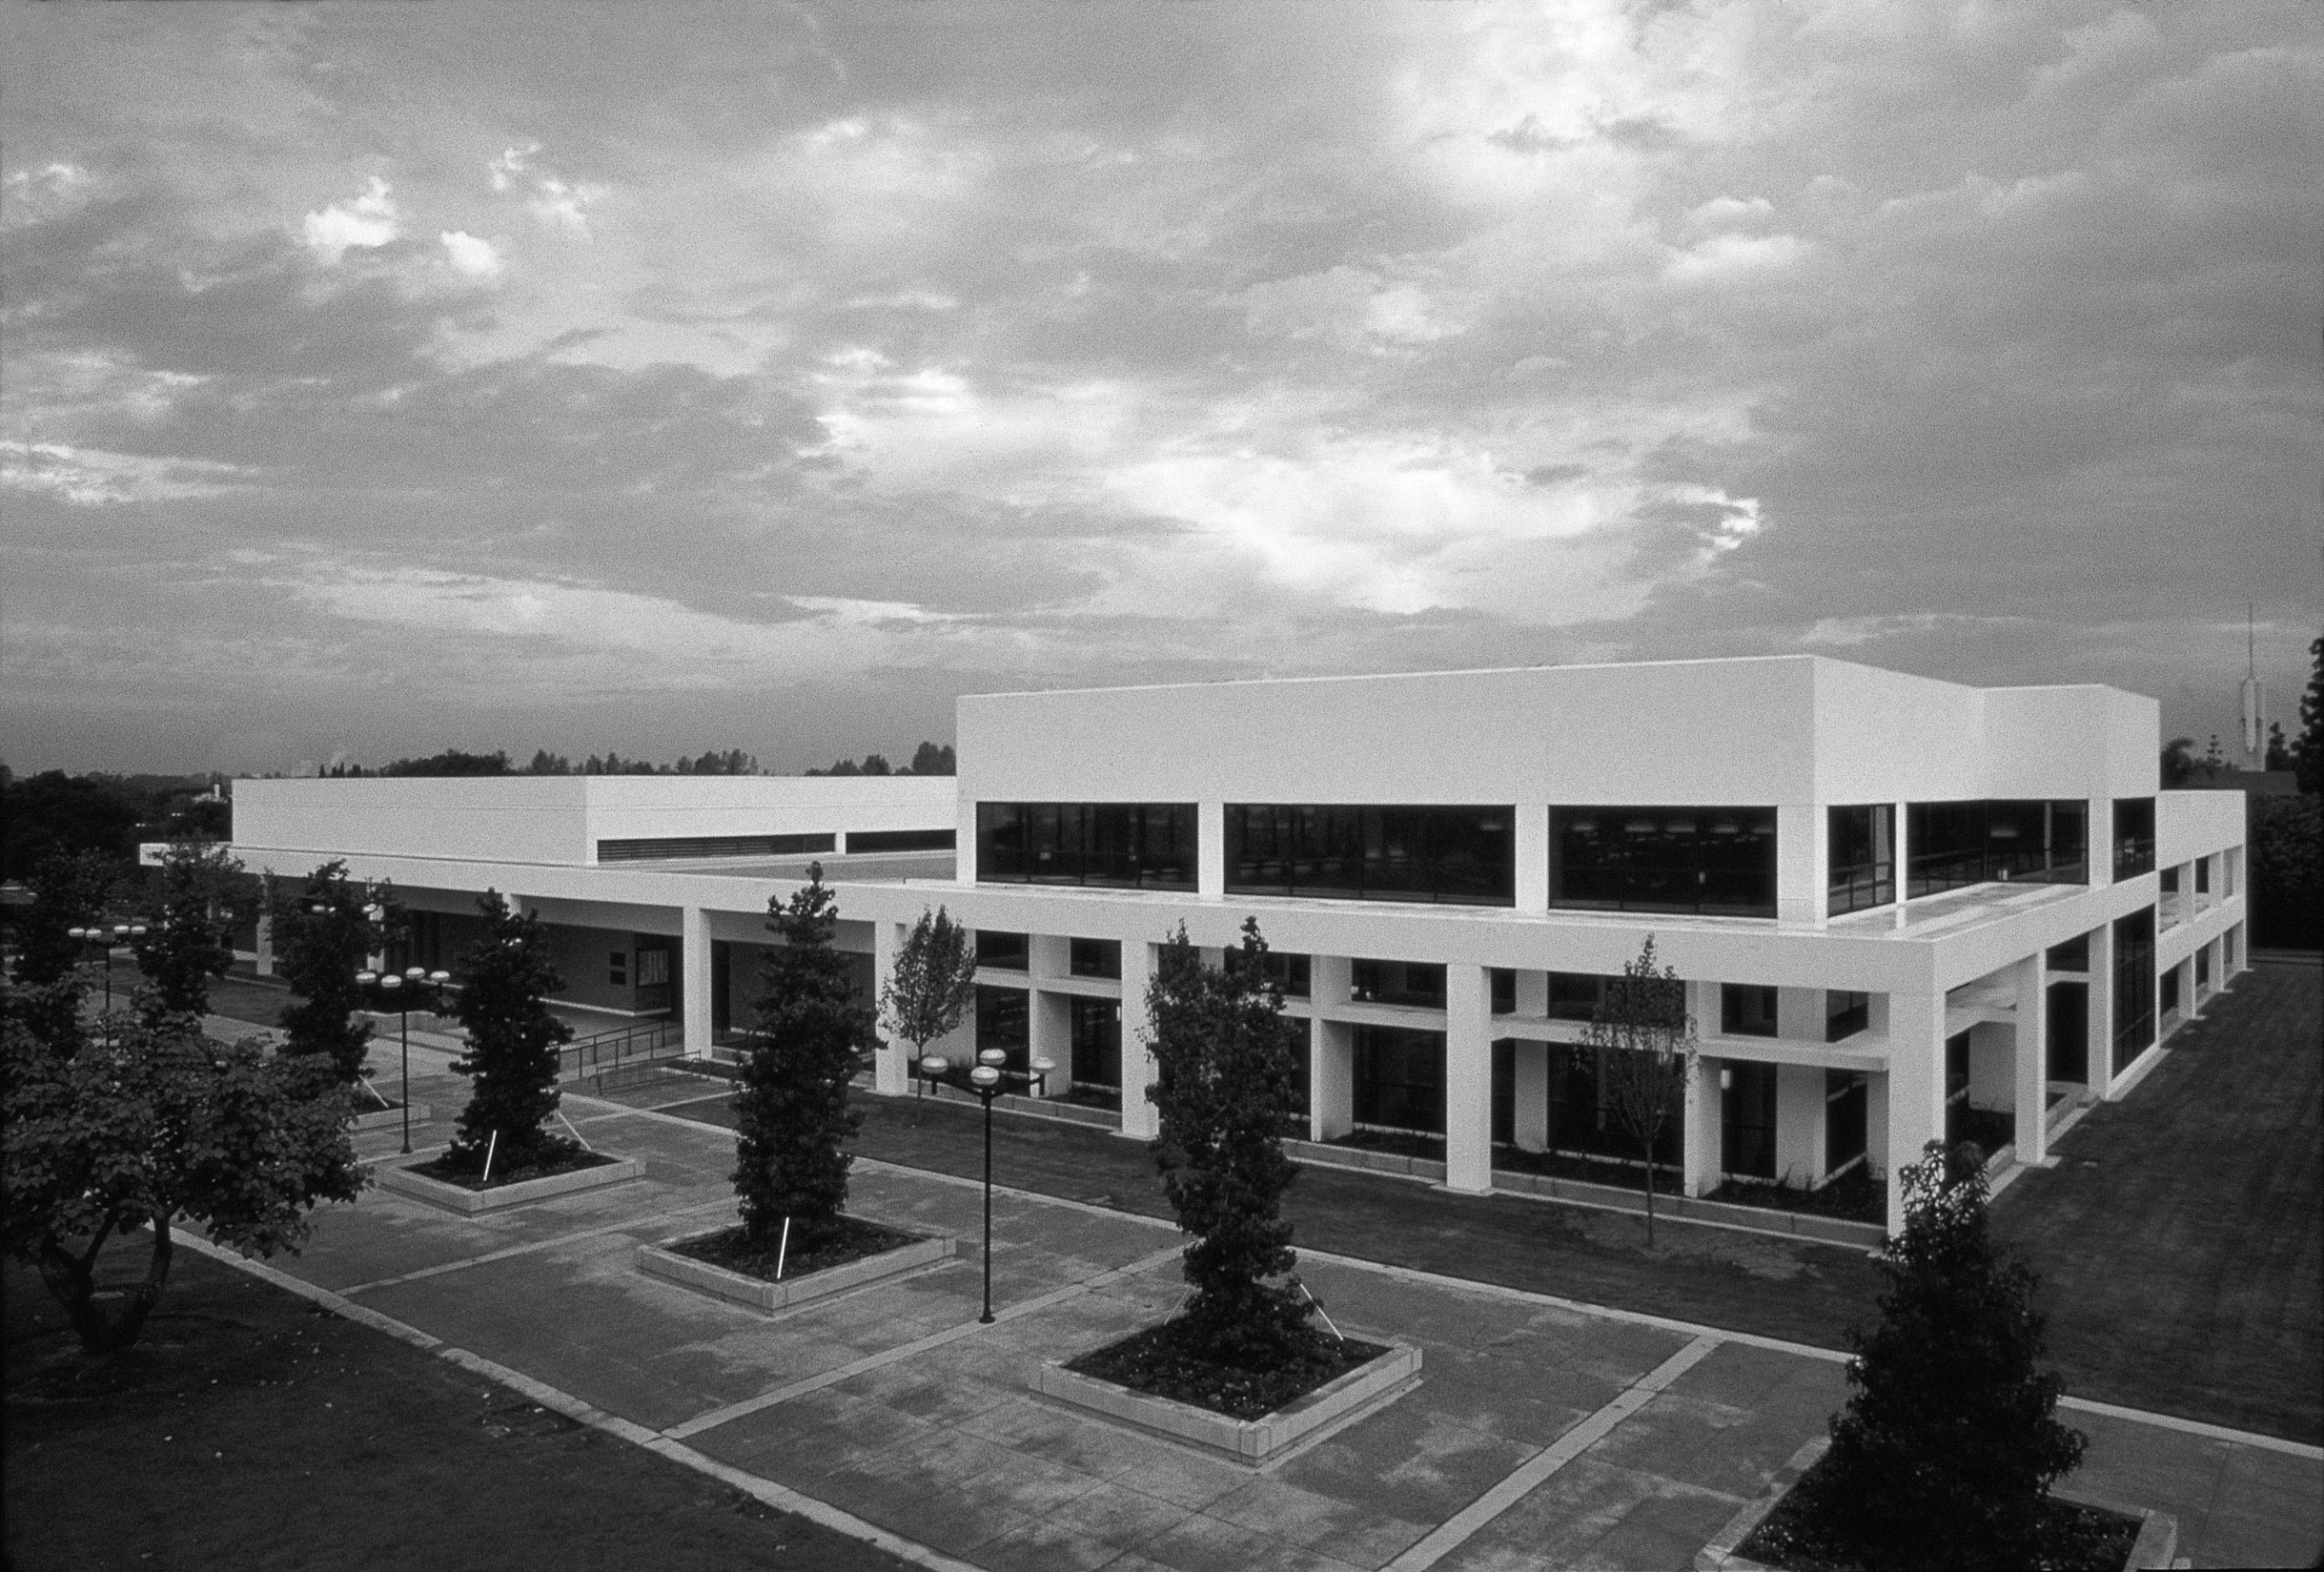 Image of the Cerritos Public Library